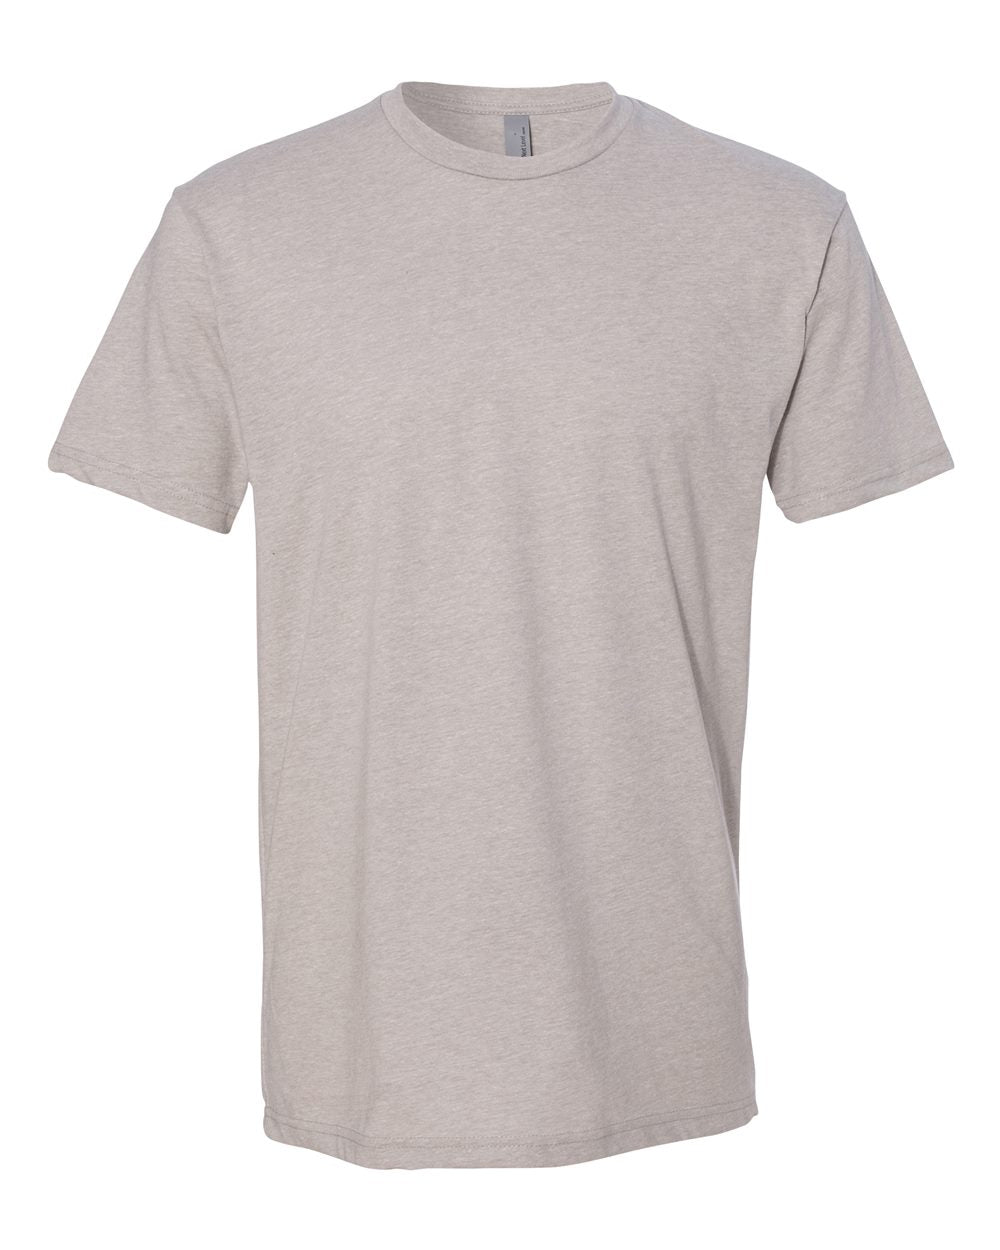 Next Level - Unisex CVC T-Shirt - 6210